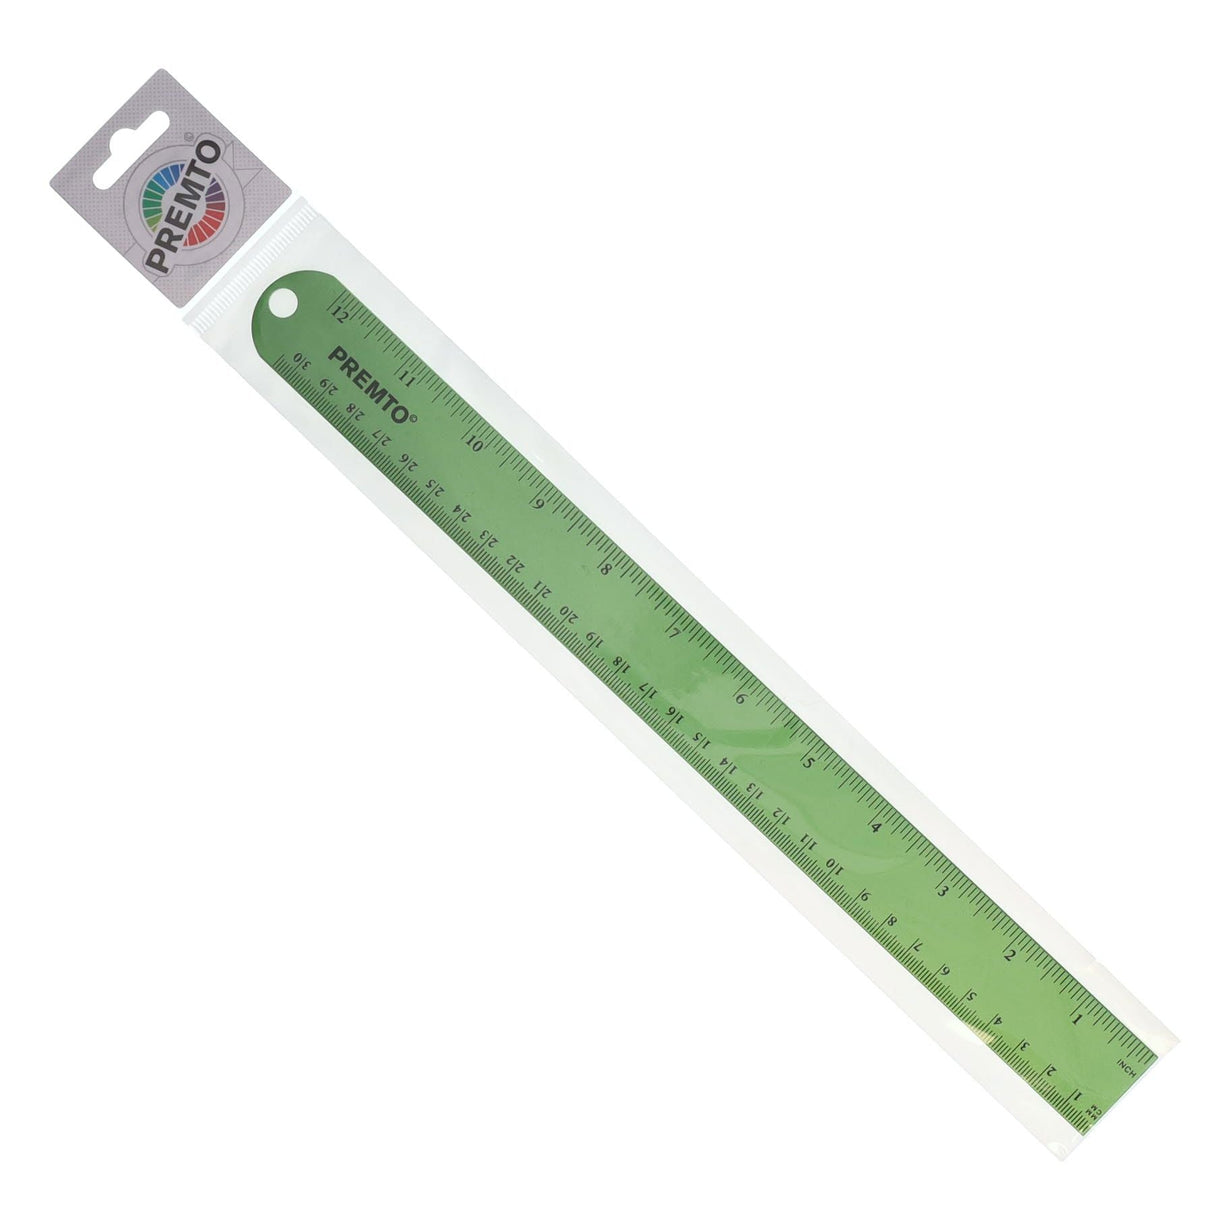 Premto S1 Aluminium Ruler 30cm - Caterpillar Green-Rulers-Premto | Buy Online at Stationery Shop